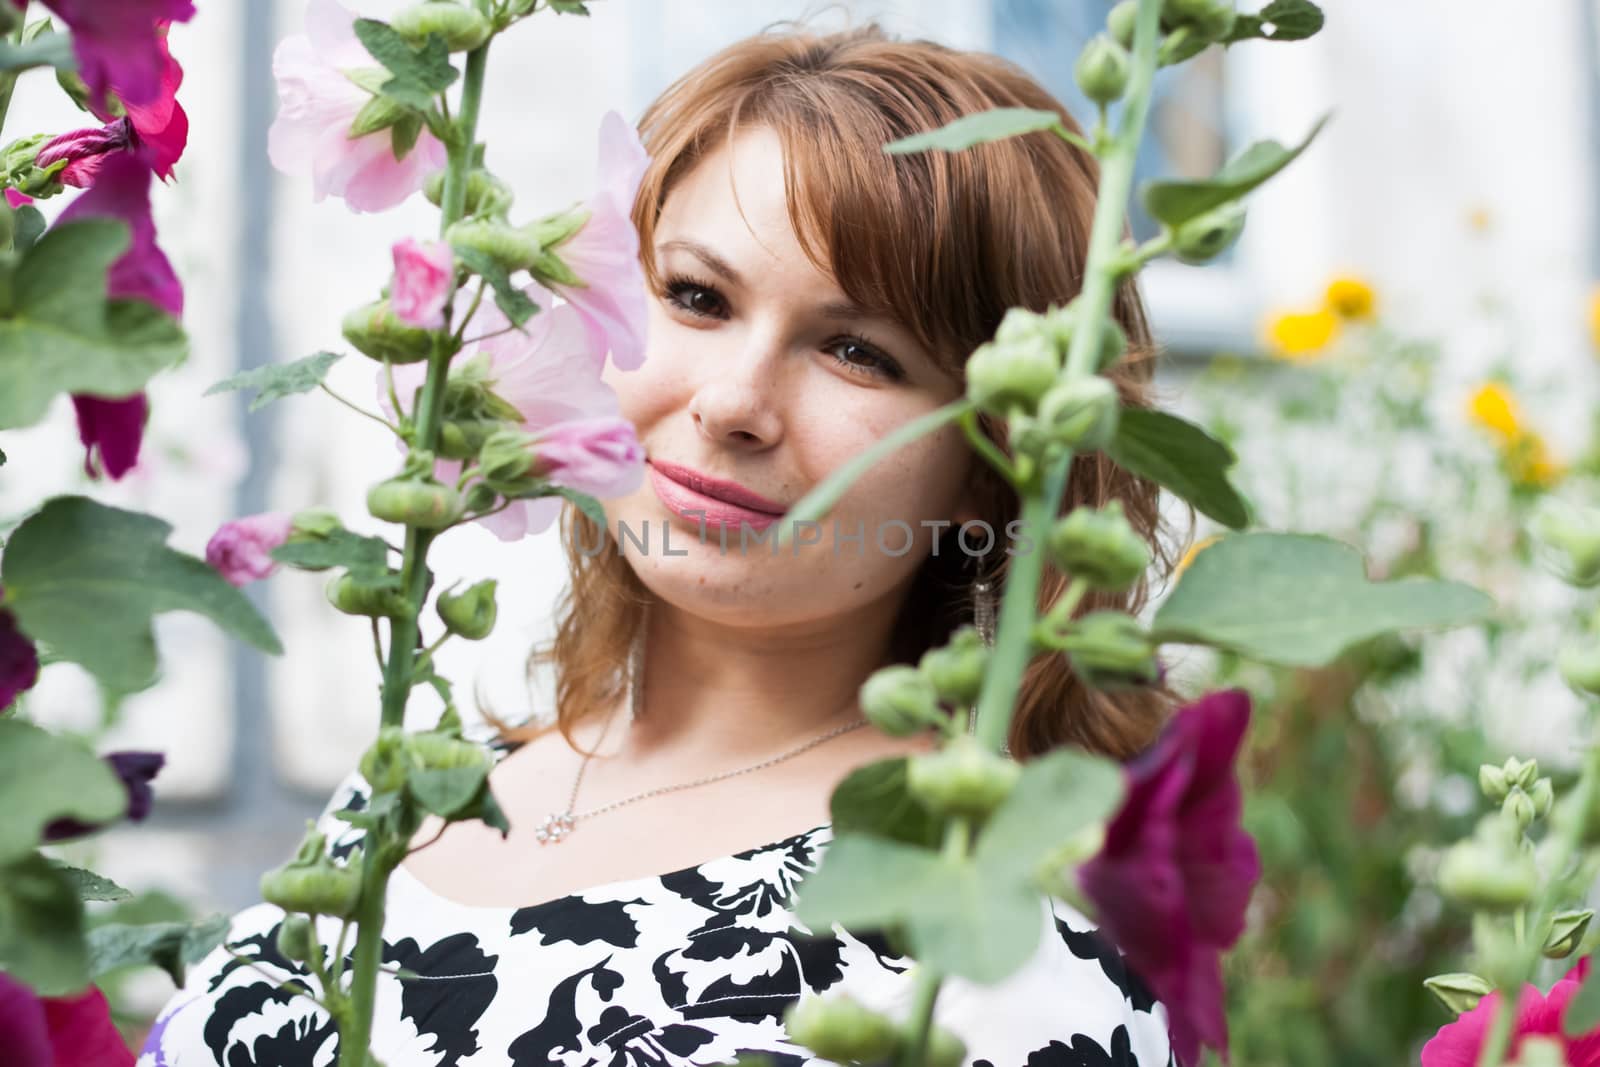 beautiful girl surrounded by colorful flowers mallow by malyshkamju